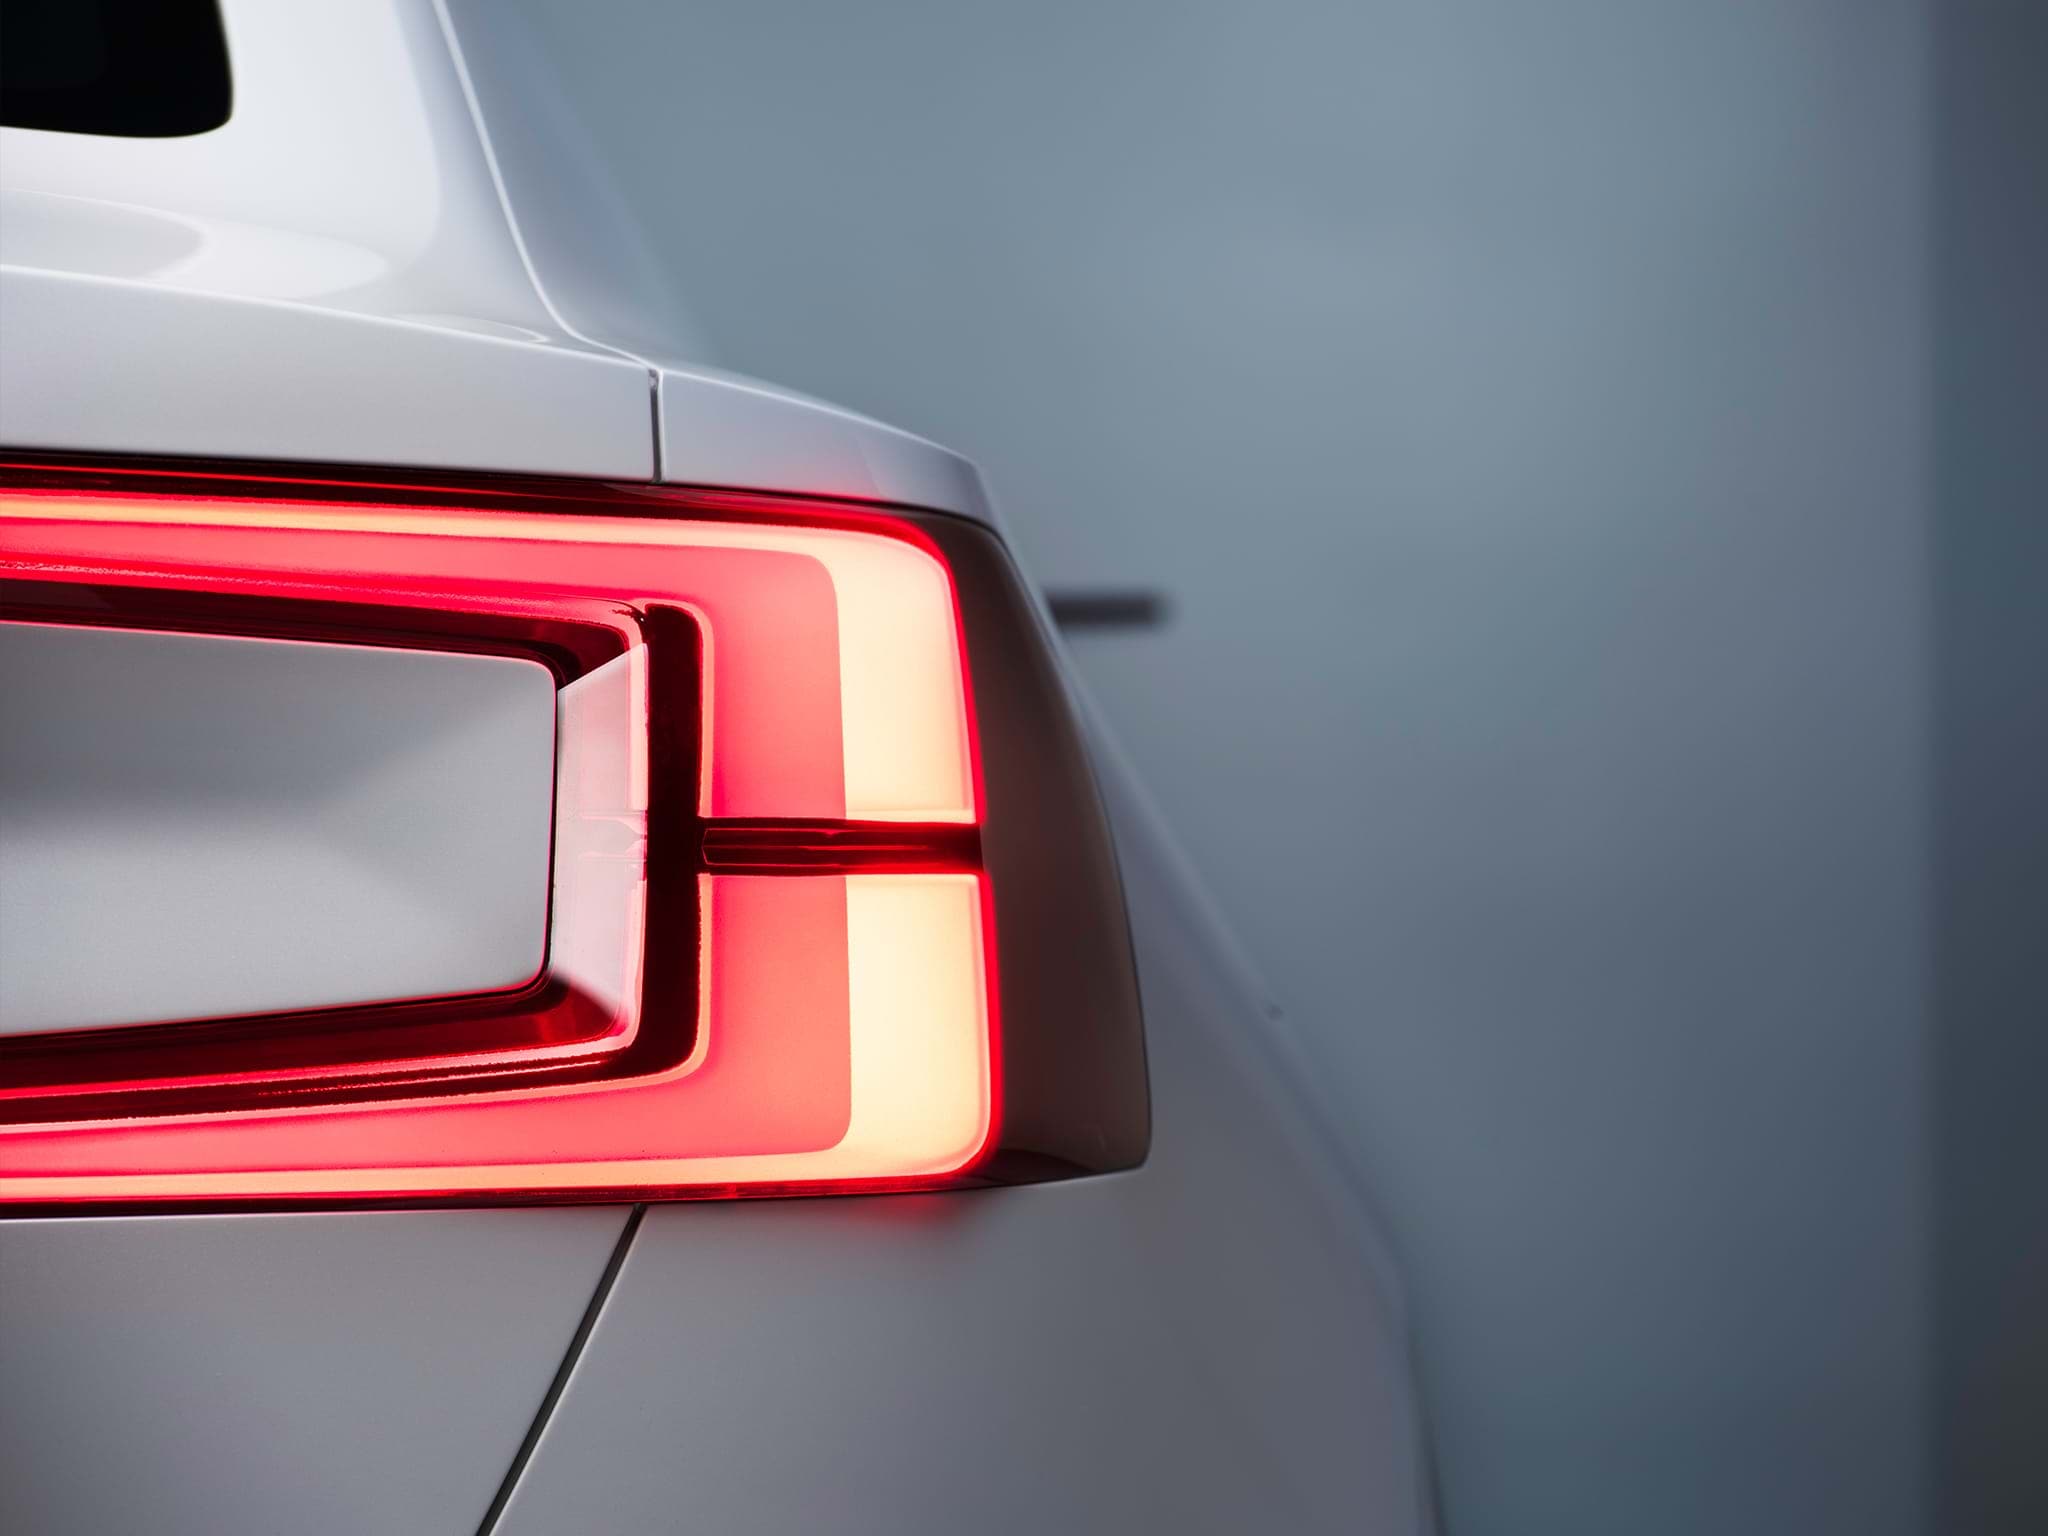 Vista parcial da traseira do carro sedan Volvo Concept 40 branco com luzes traseiras acesas